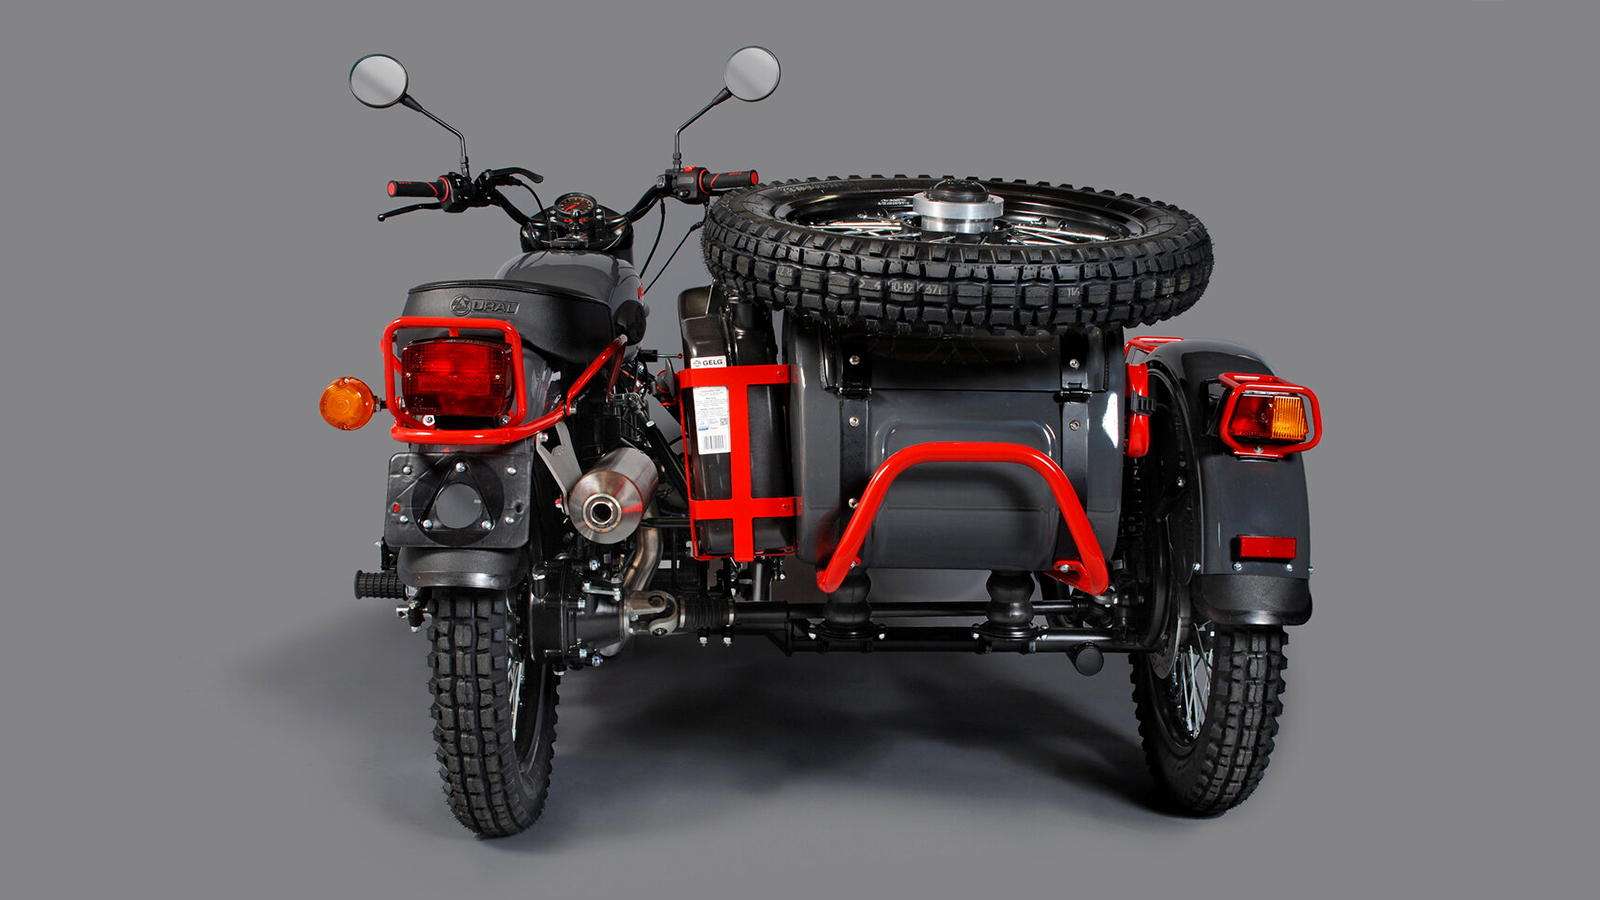 Мотоцикл Ural Gear up 2020